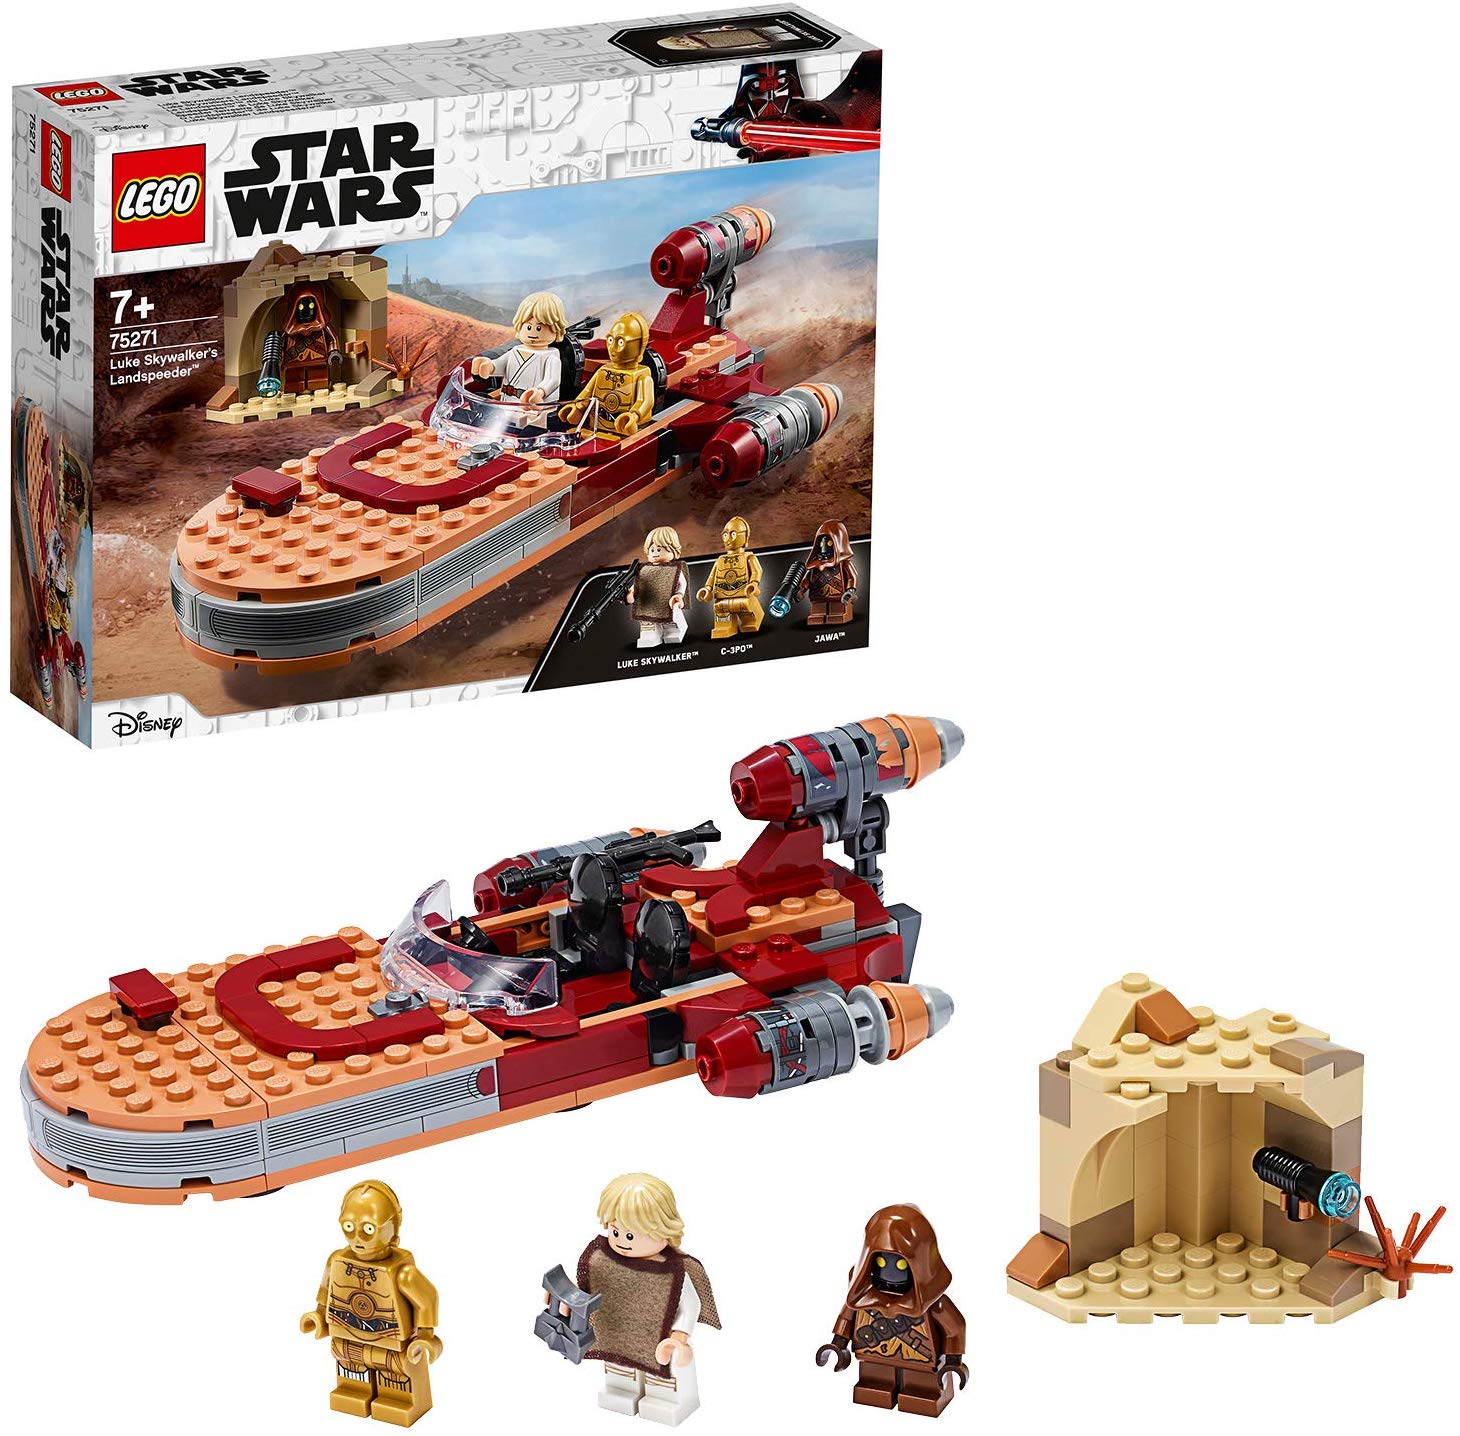 LEGO 75271 - Luke Skywalker’s Landspeeder, Star Wars, Construction Kit